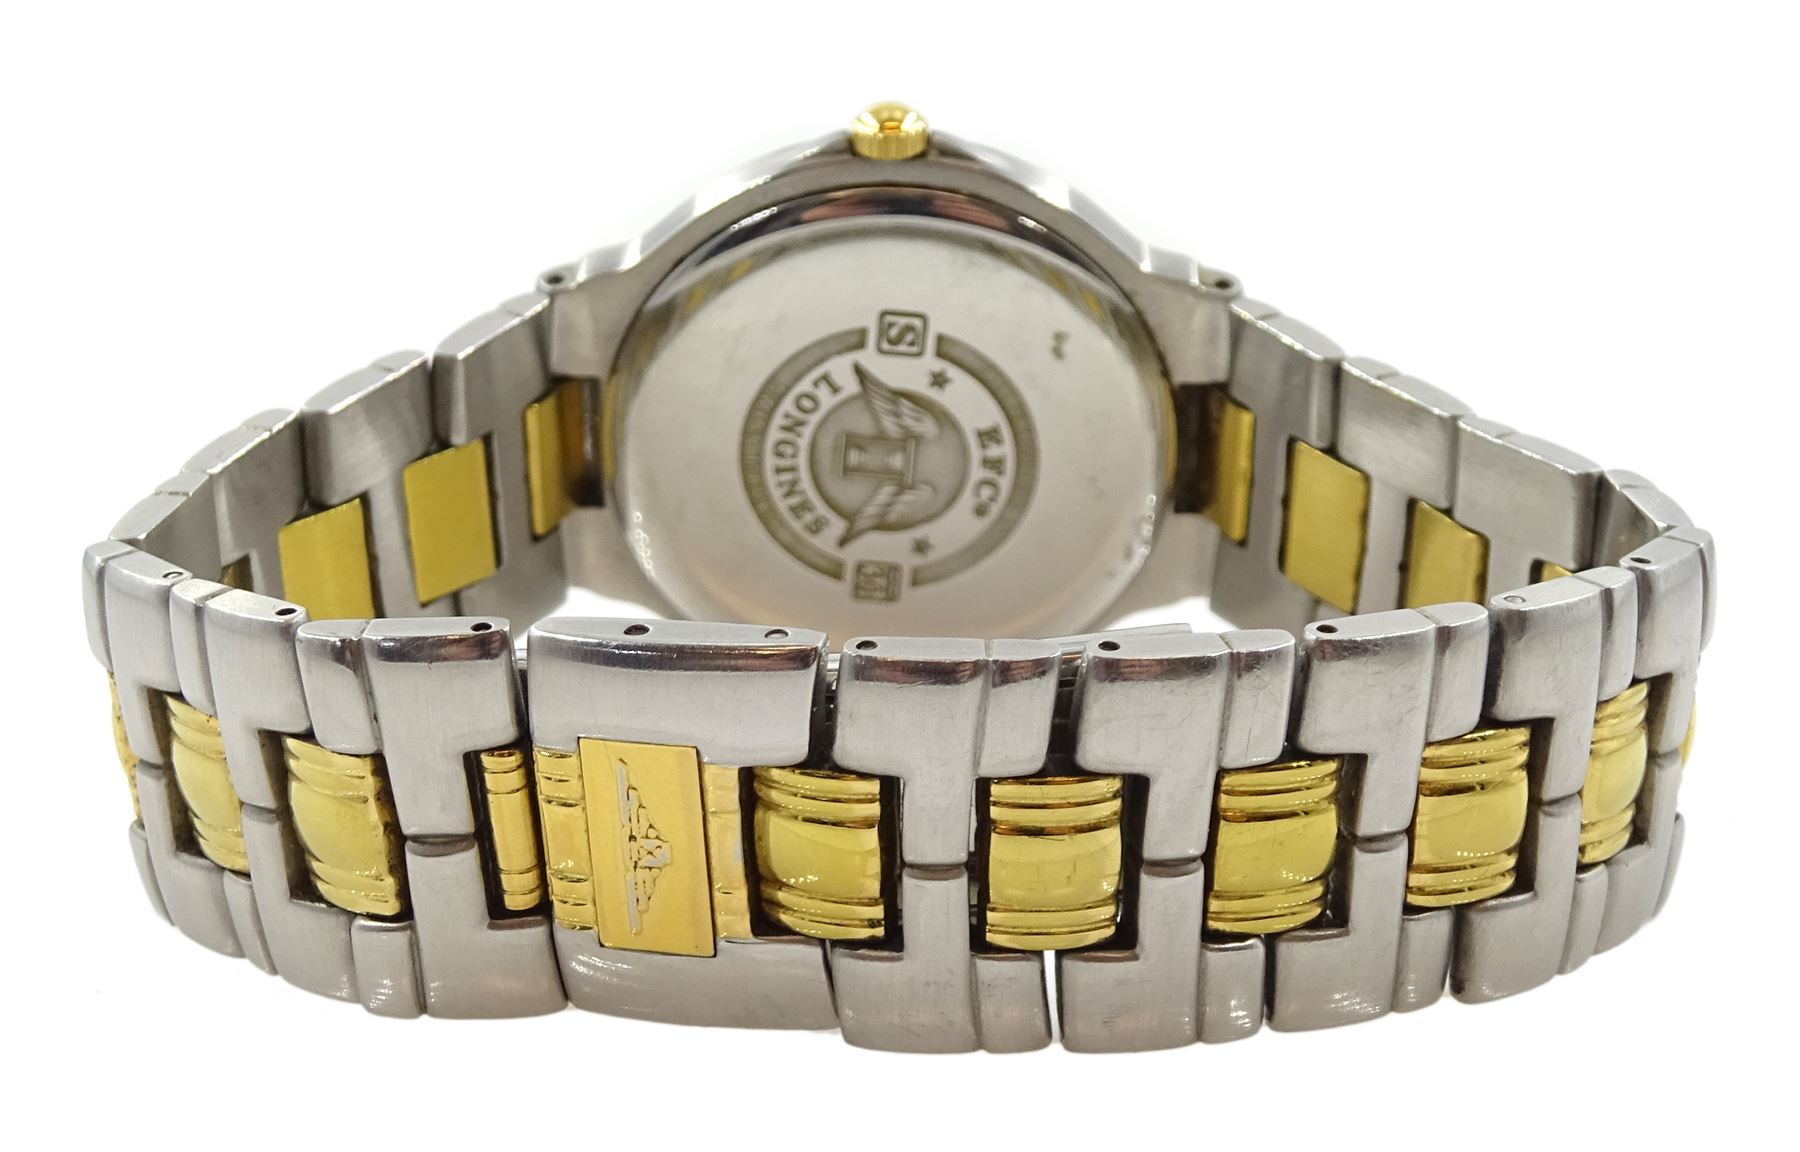 Longinges Flagship quartz two tone stainless steel bracelet wristwatch No. L5 651 3 - Image 2 of 6